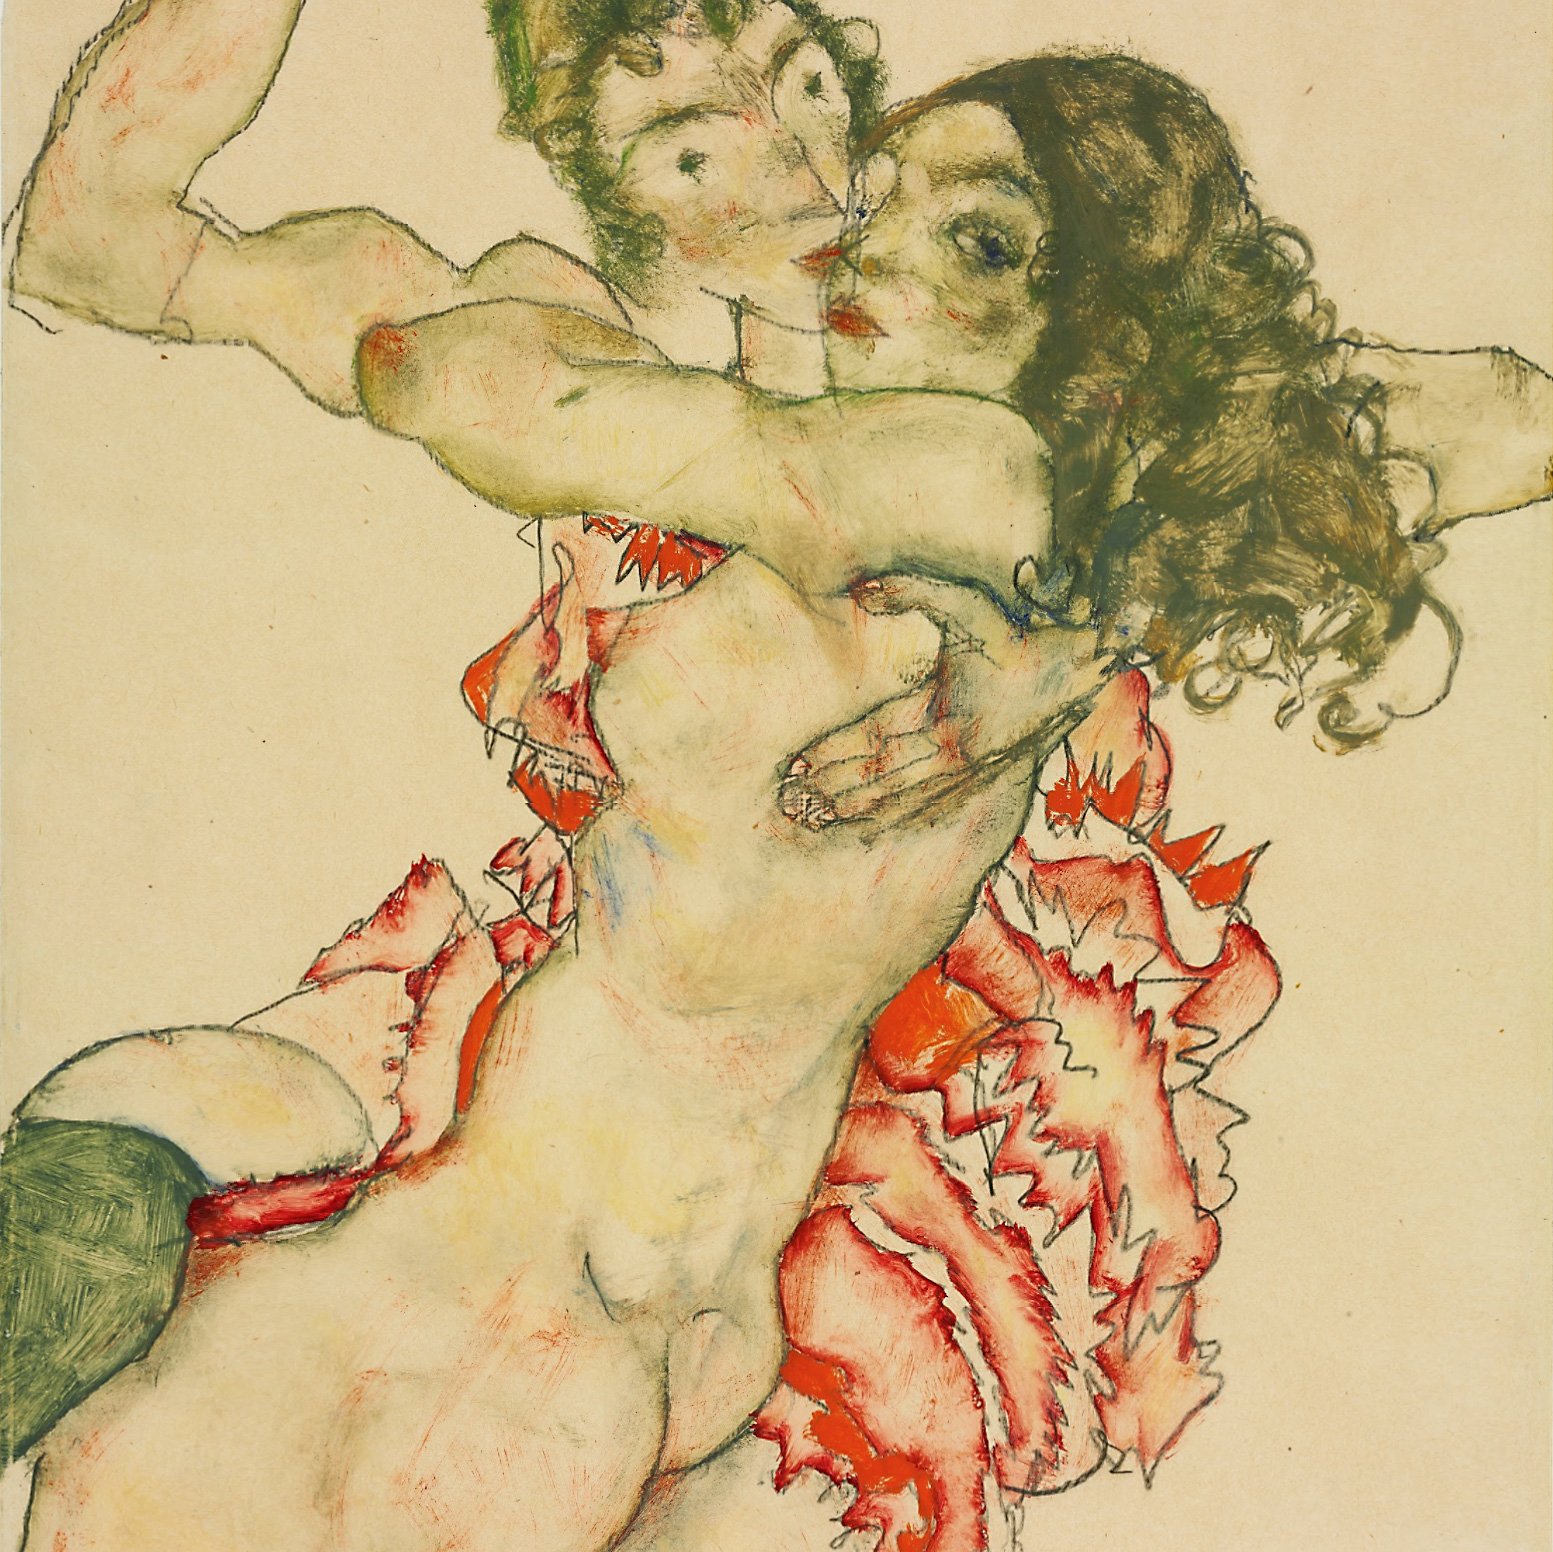 Эгон Шиле. Две женщины обнимаются (1915). Источник: wikimedia.org